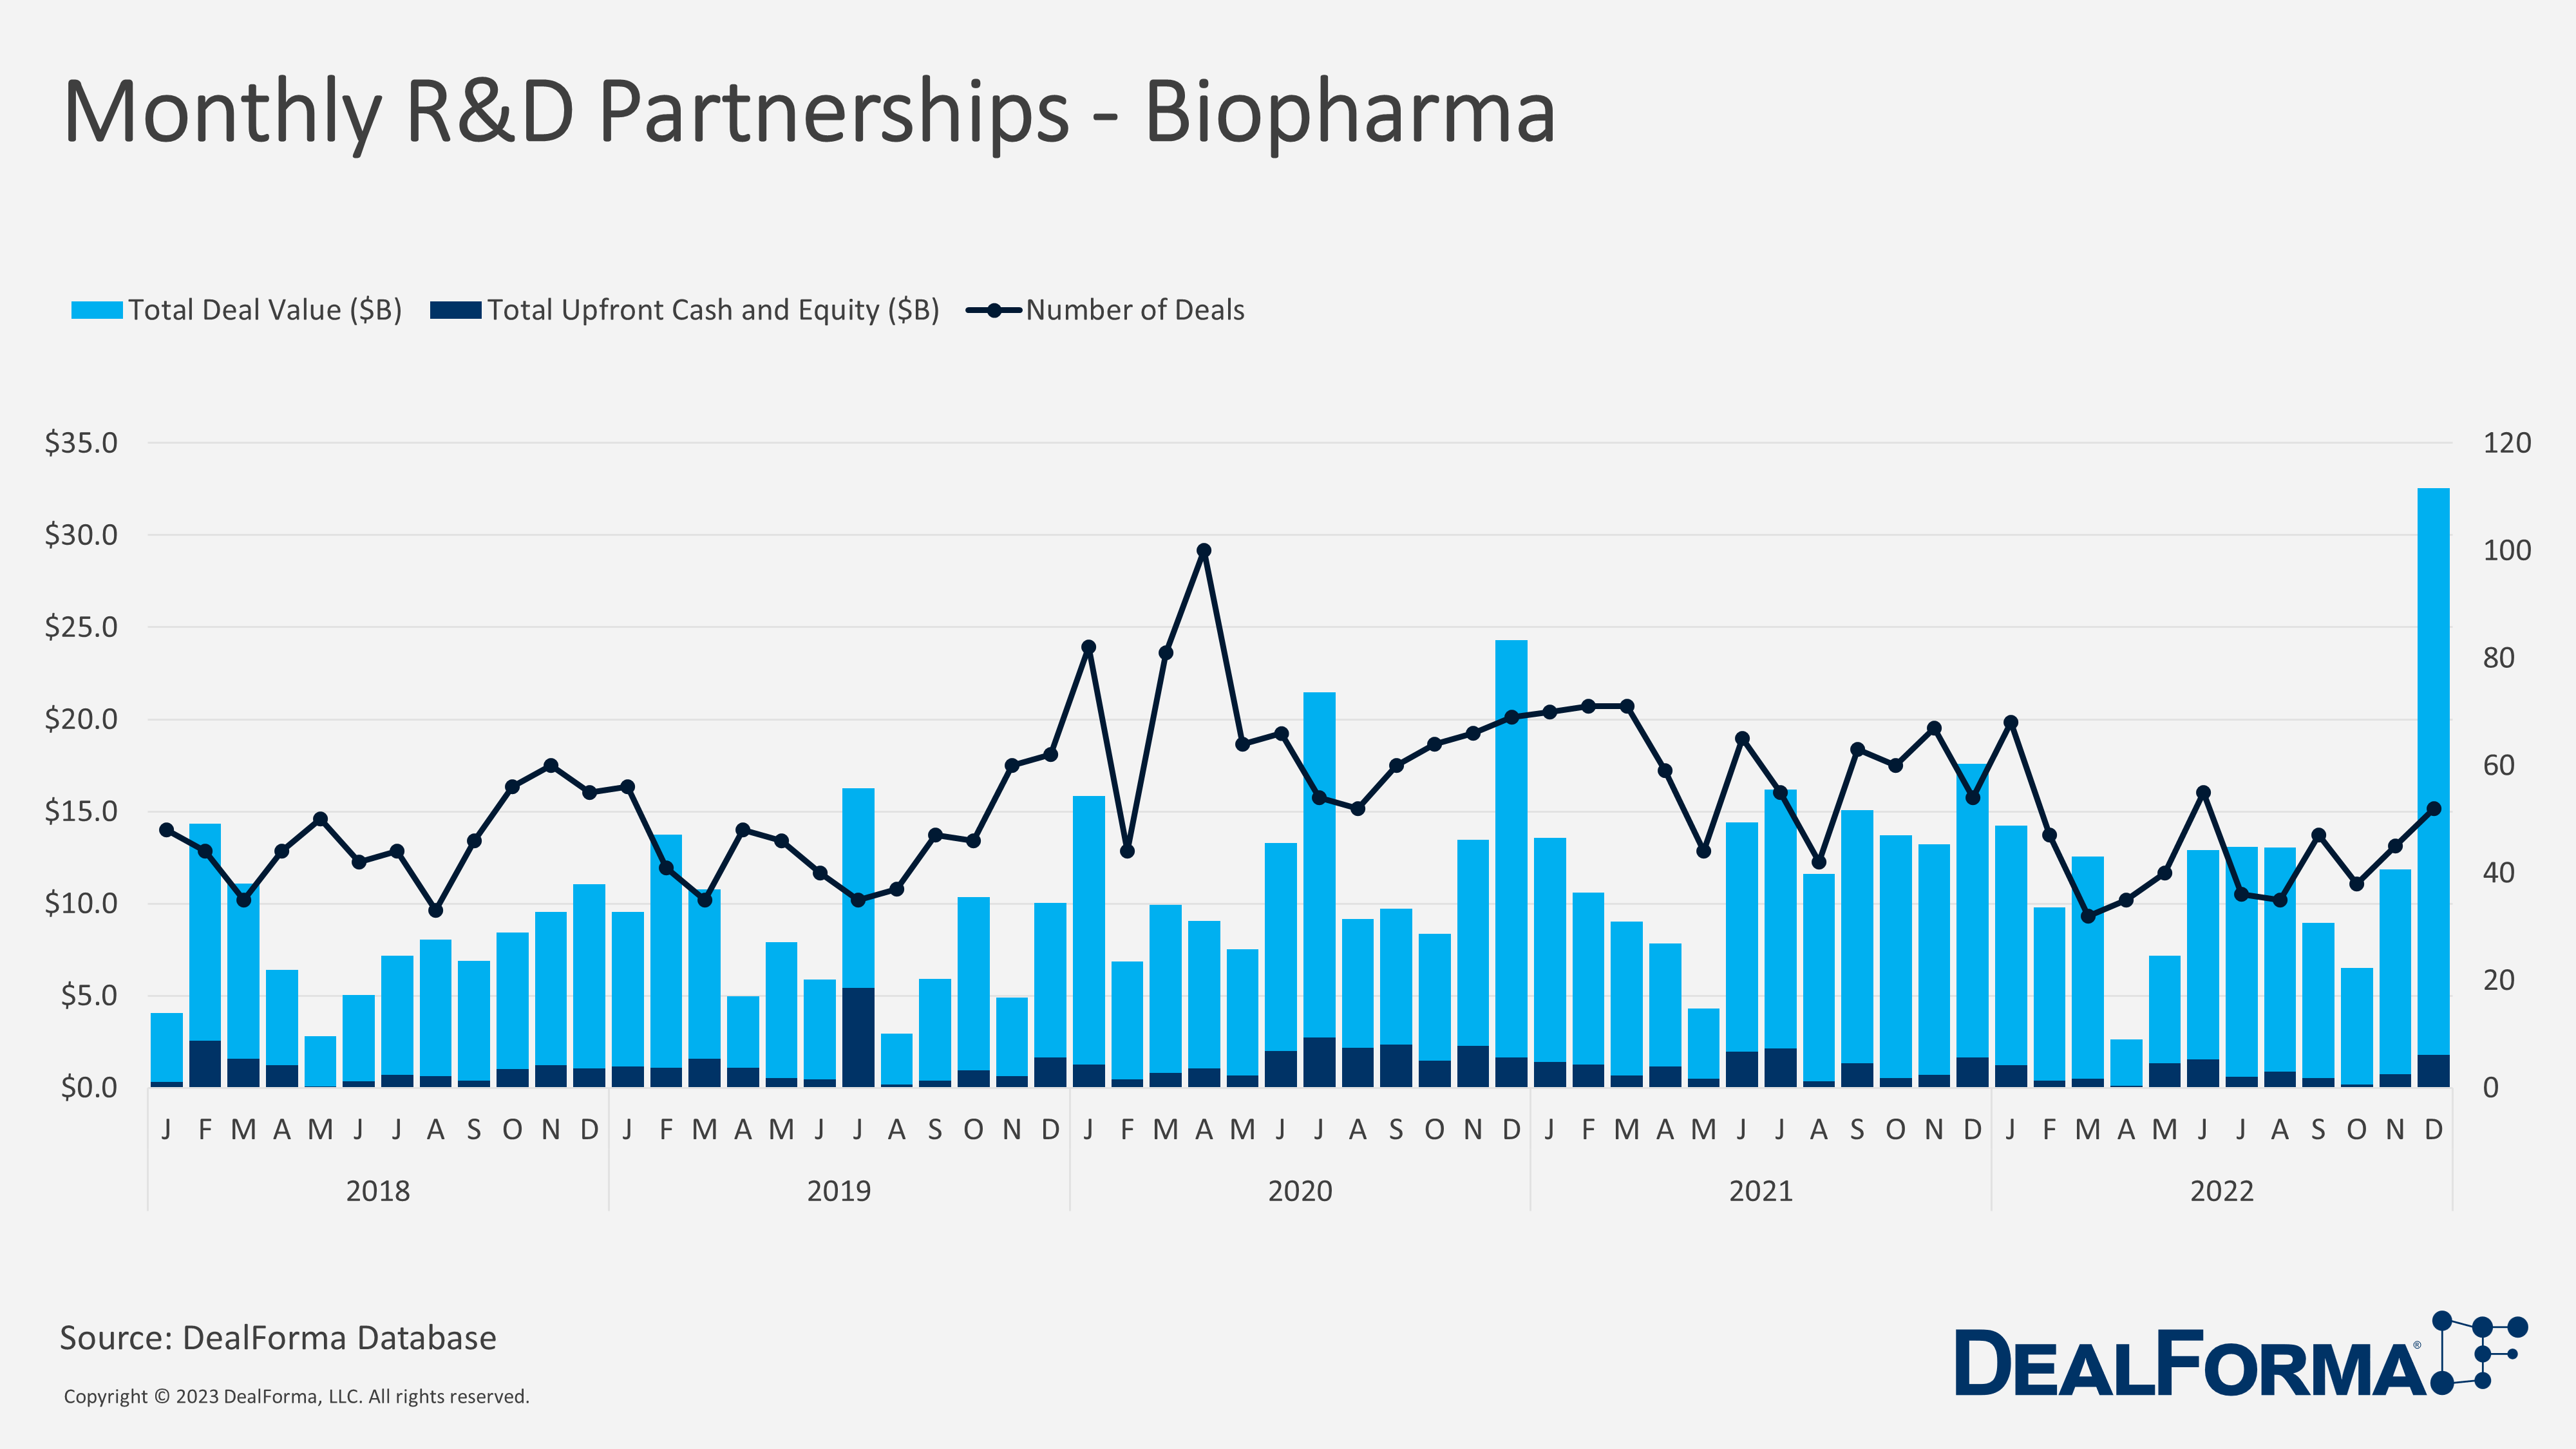 Monthly R&D Partnerships - Biopharma Including Corona/Covid